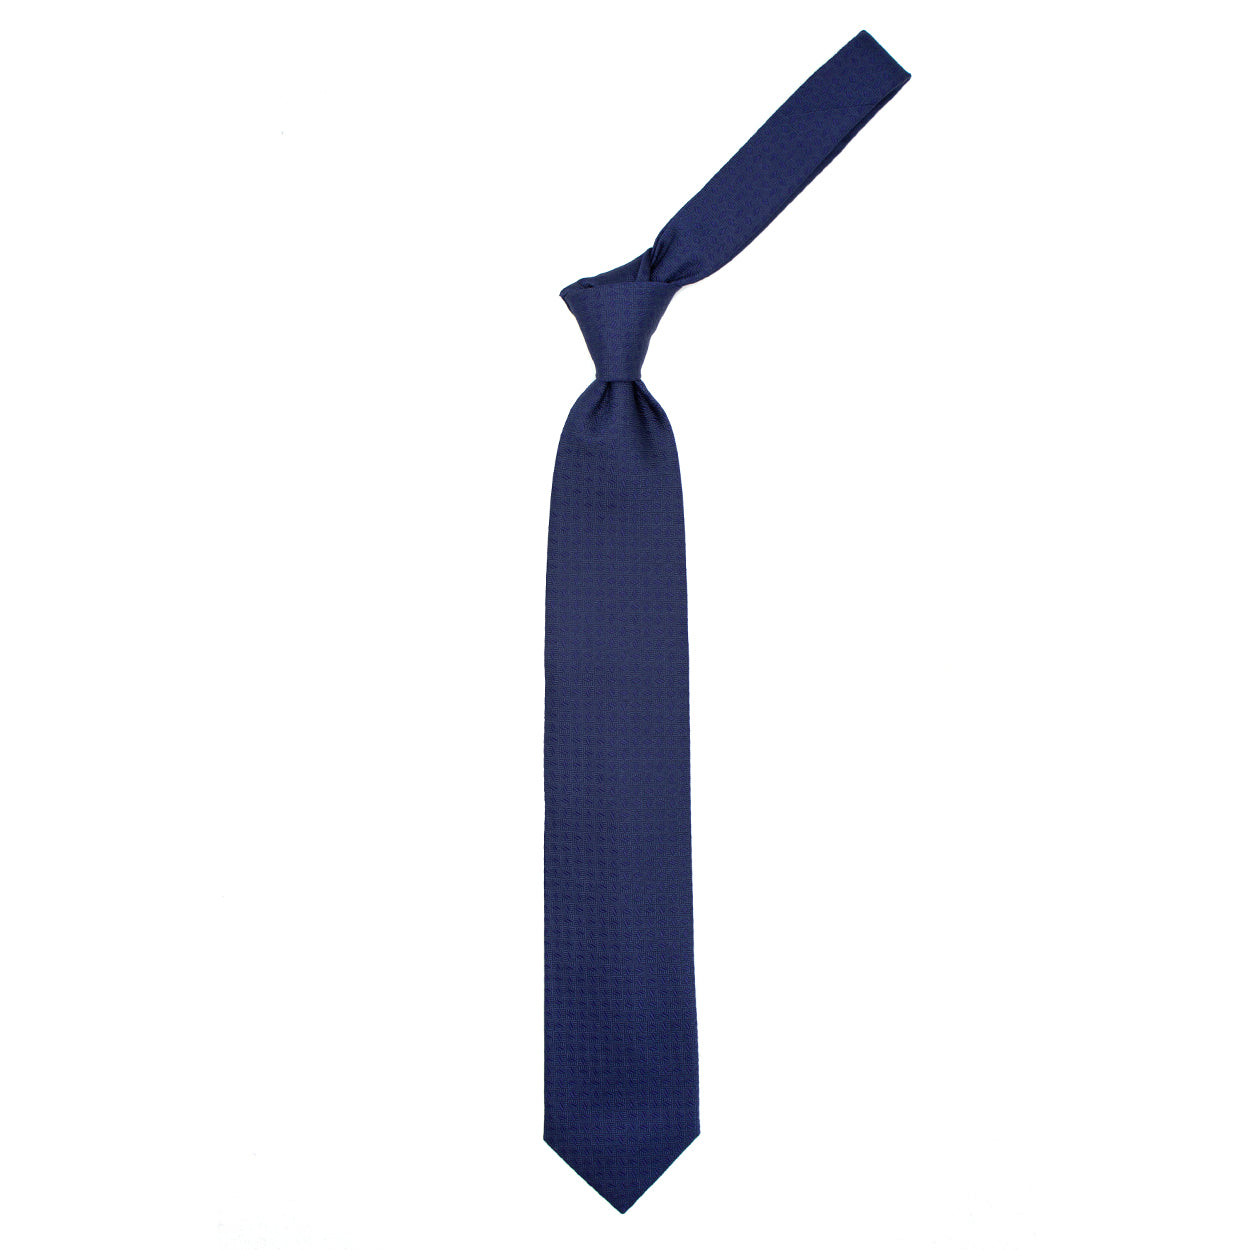 Blue tie with tone on tone geometric pattern